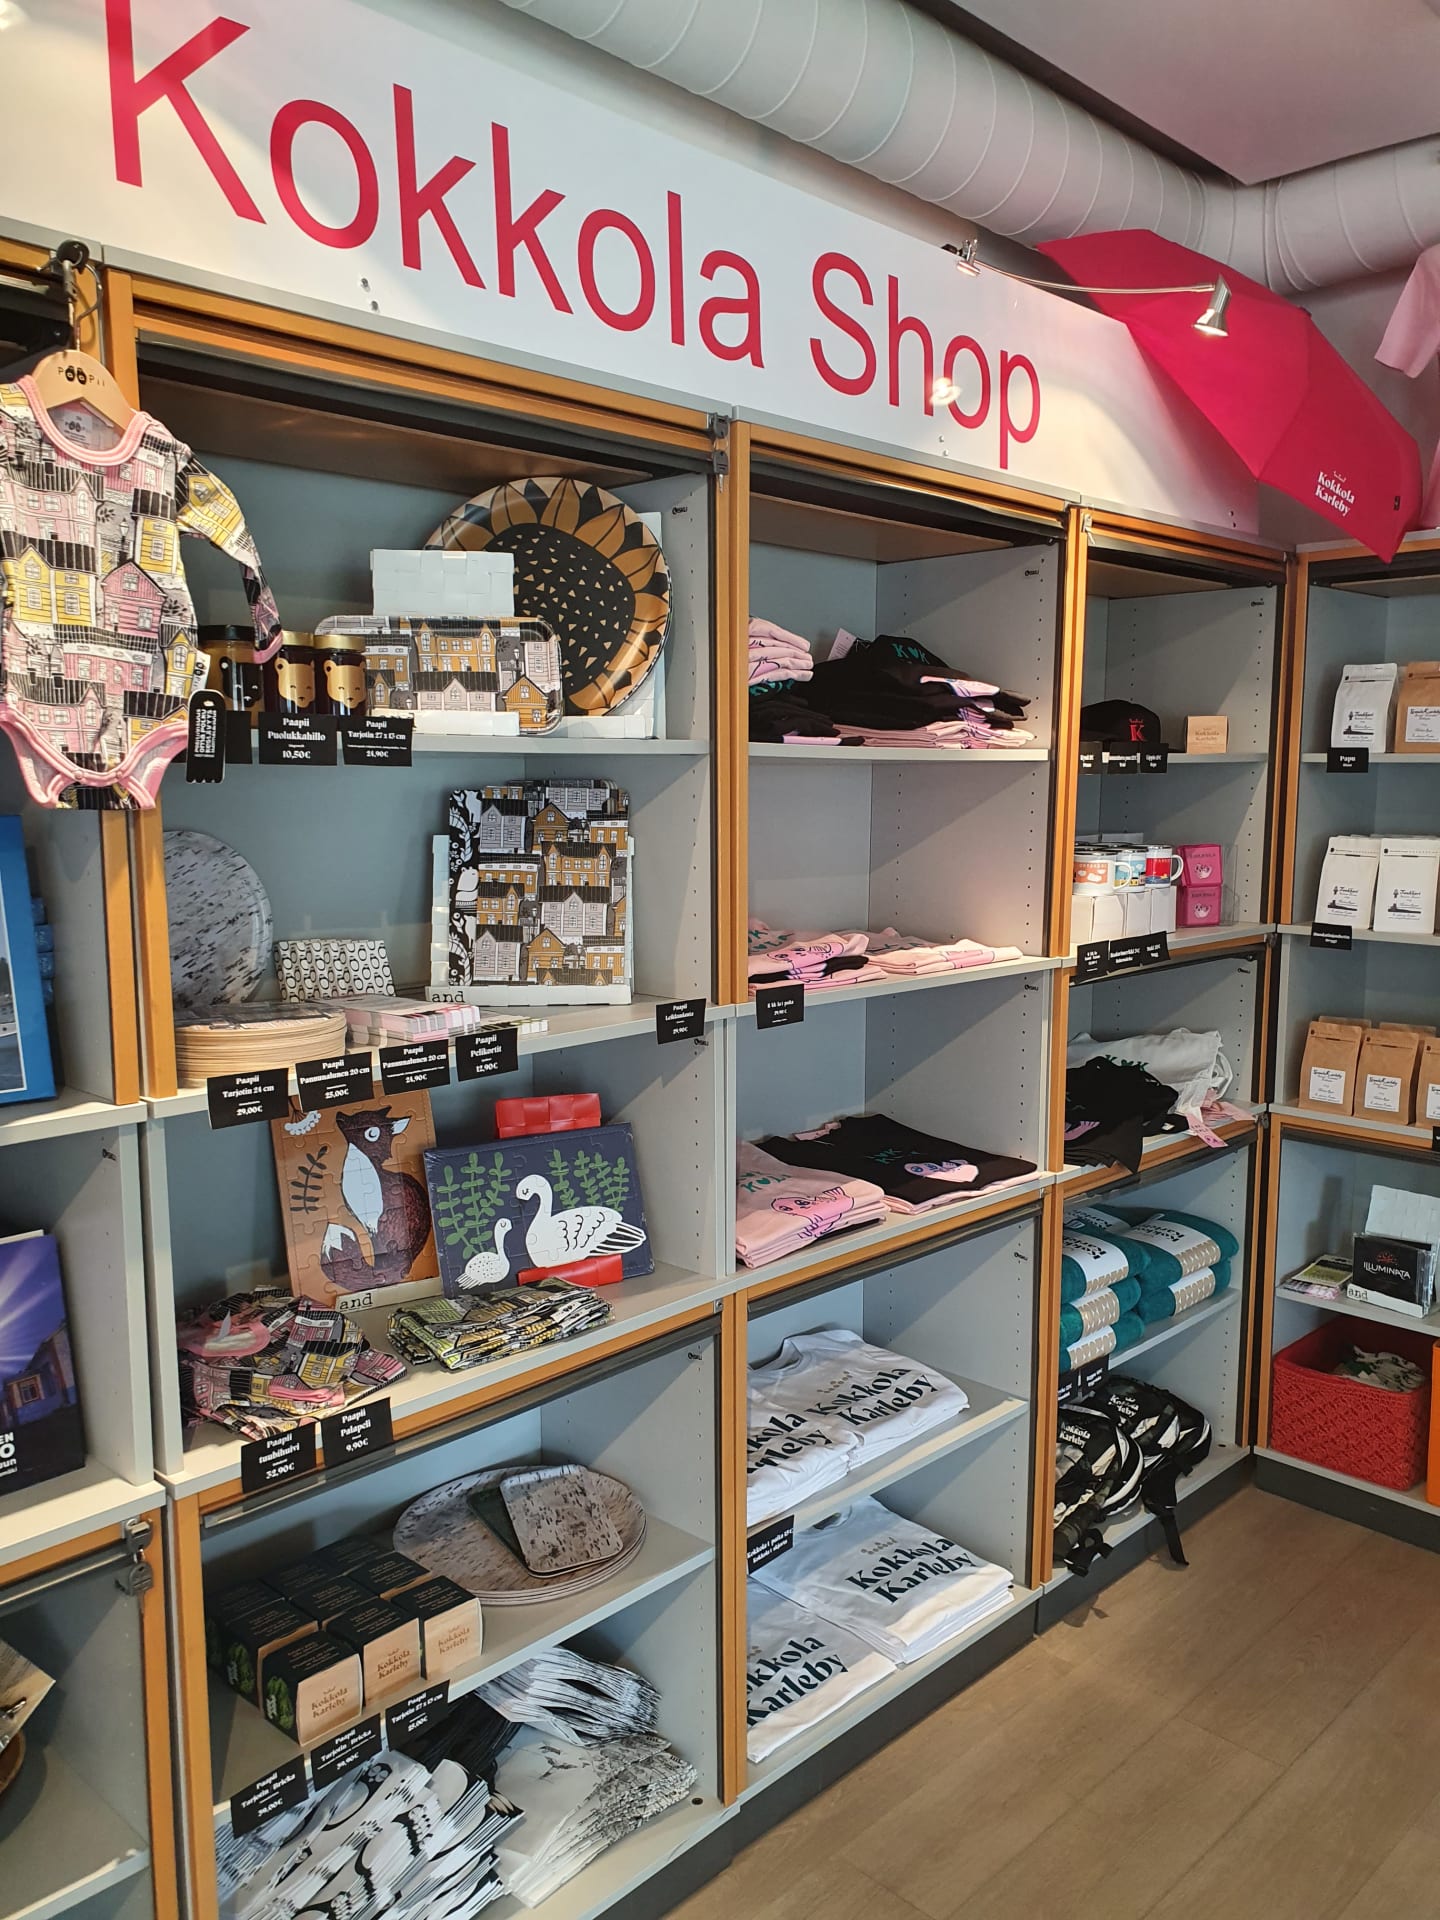 Kokkola Shop